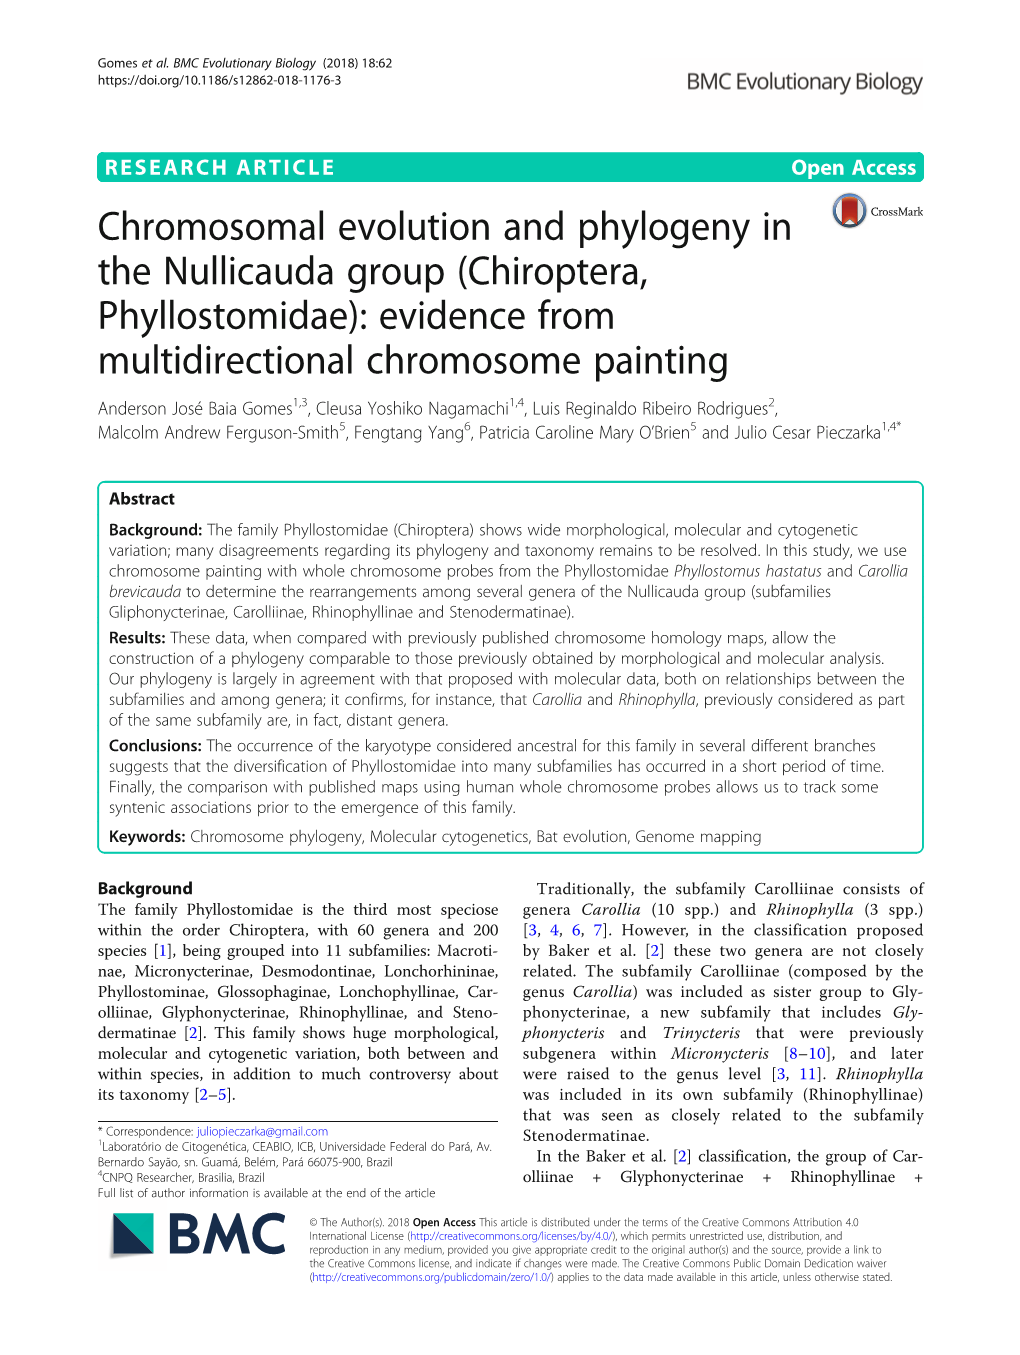 Chromosomal Evolution and Phylogeny in the Nullicauda Group